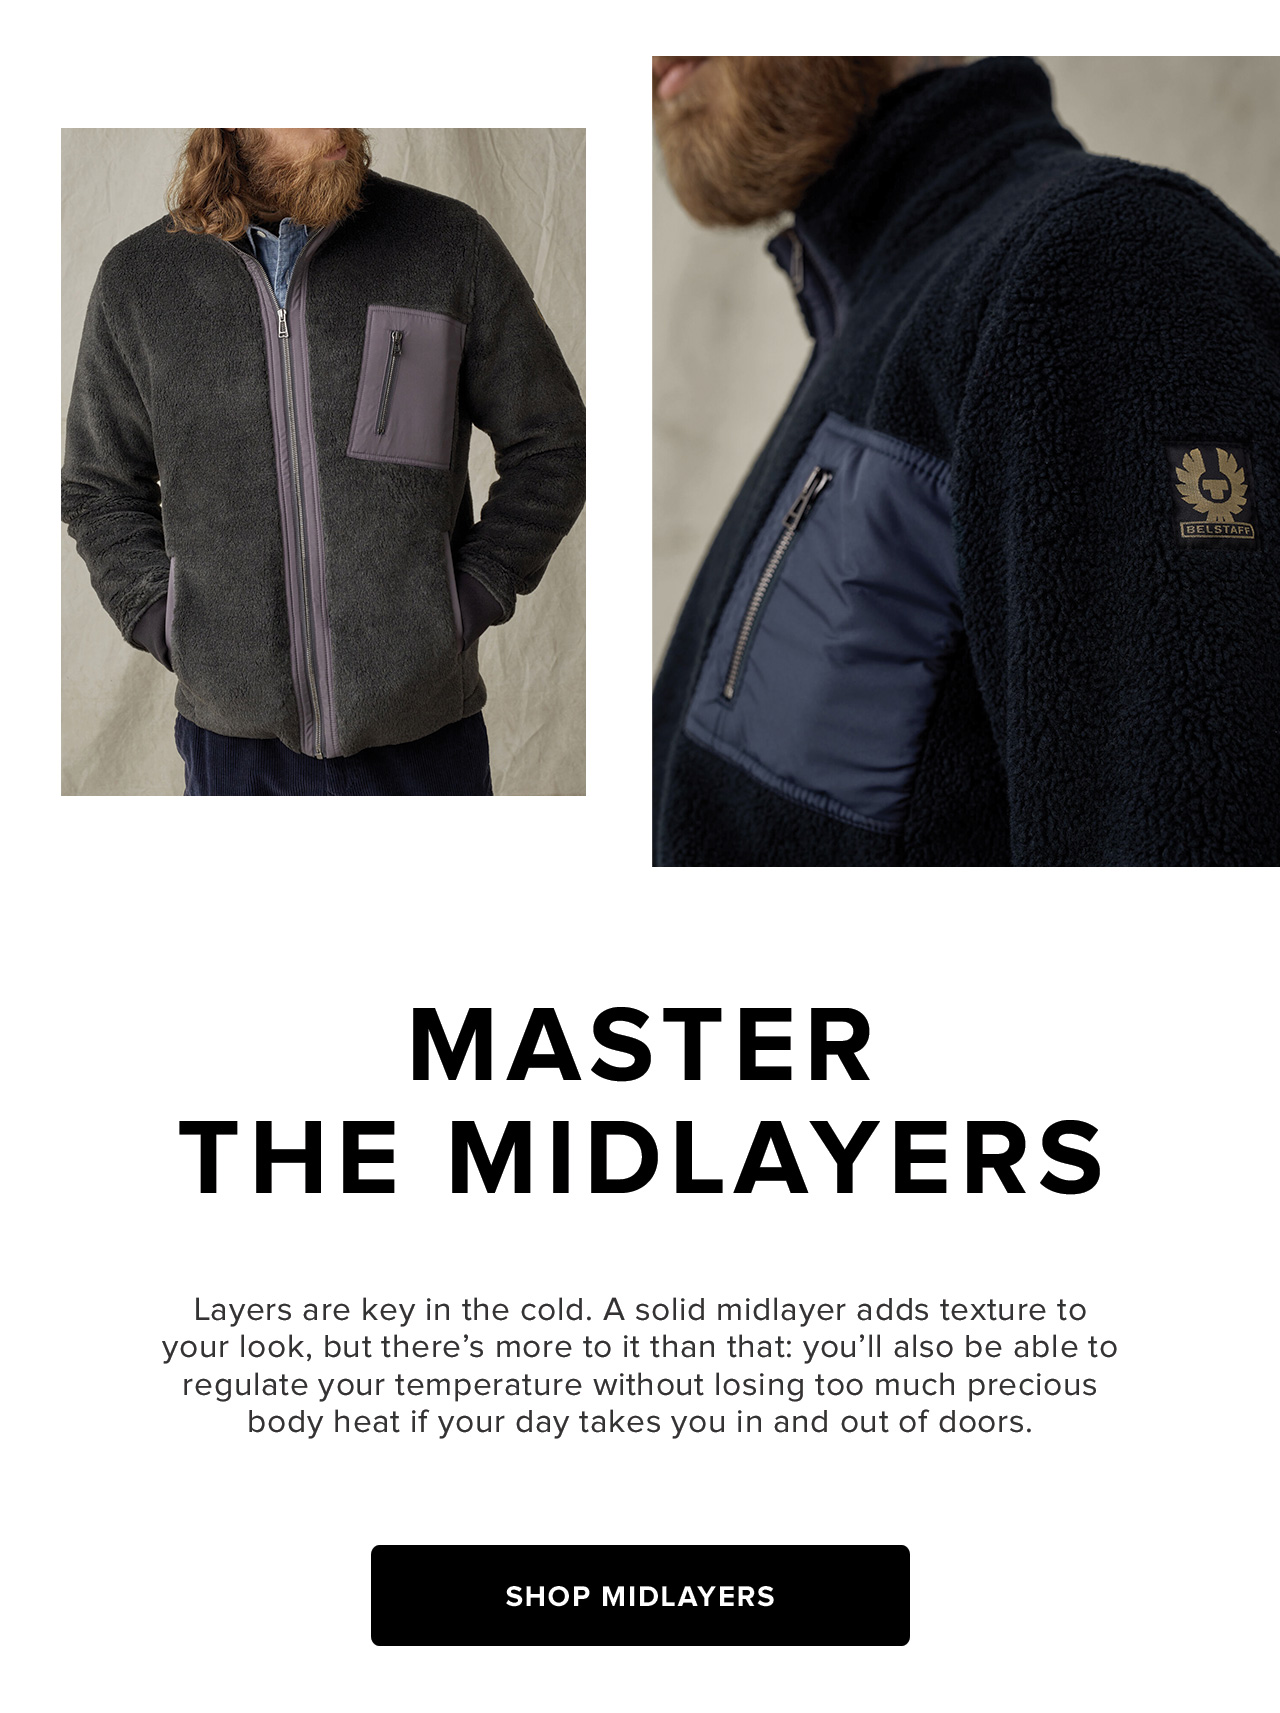 Master the midlayers